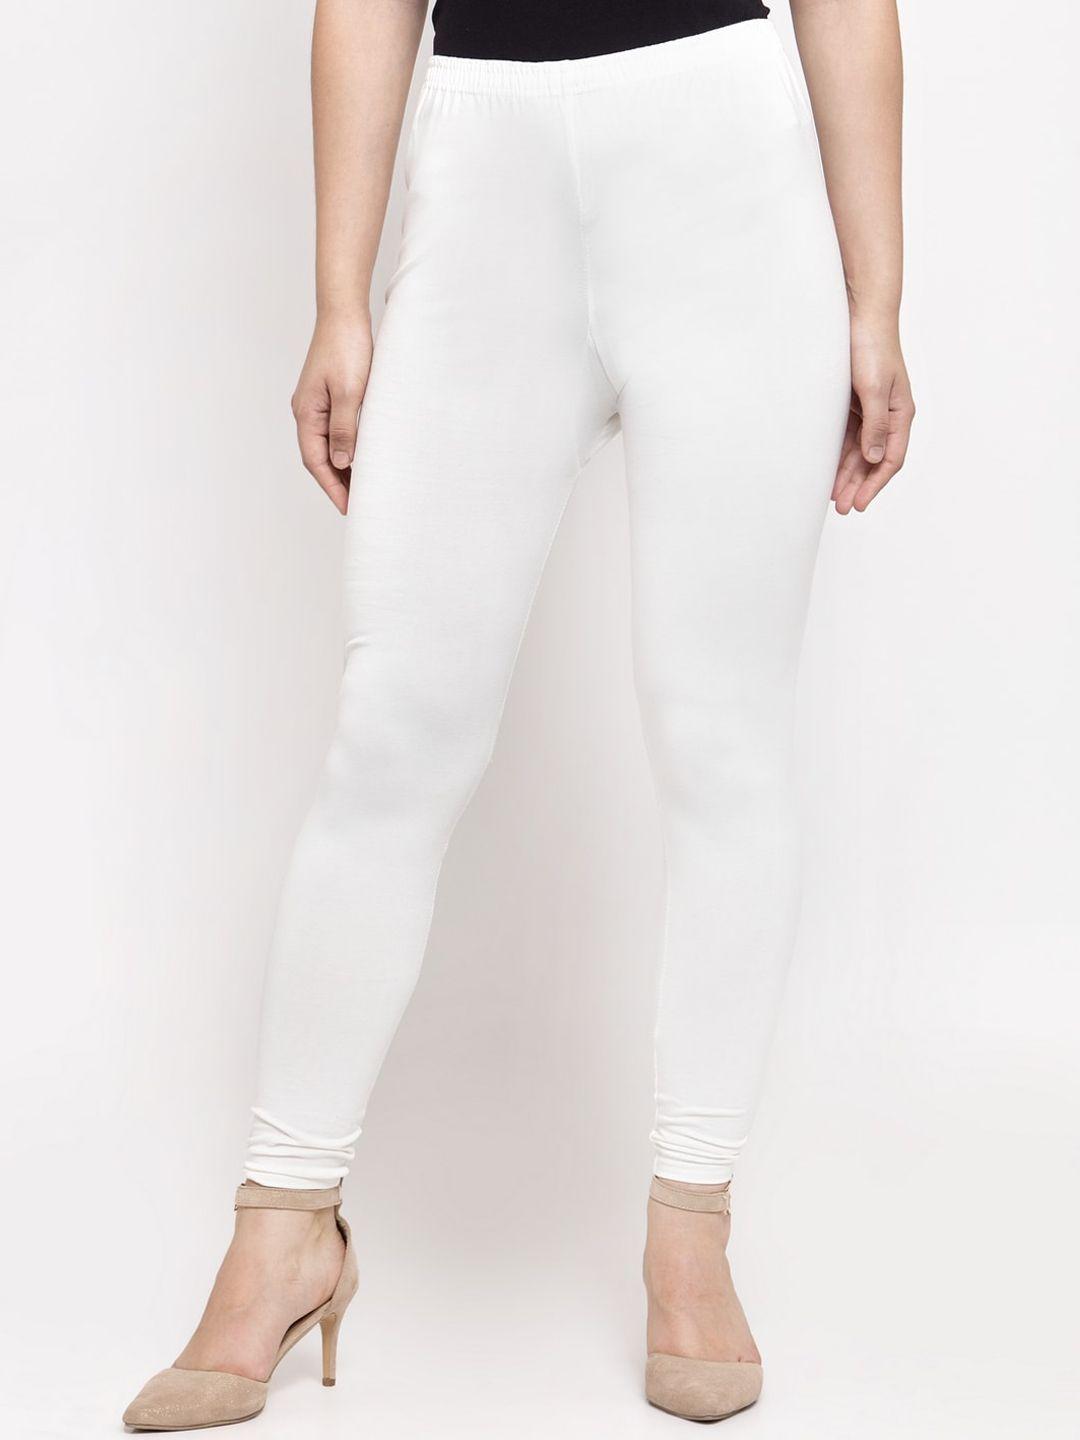 gracit-women-white-super-combed-cotton-lycra-legging